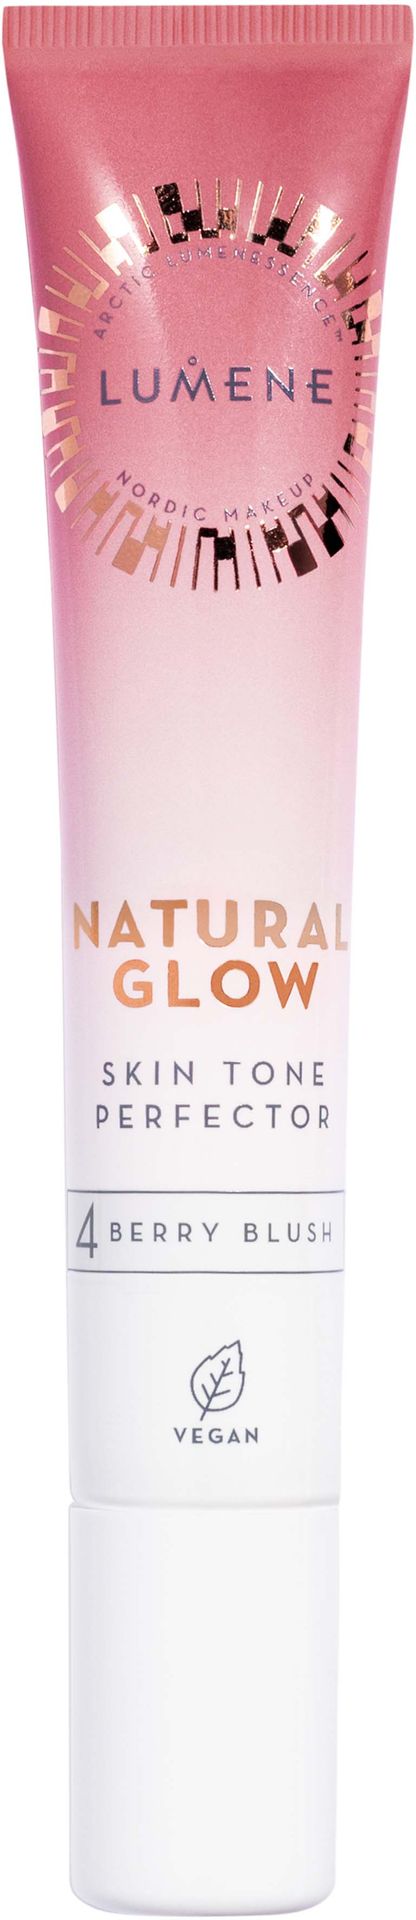 Lumene Natural Glow Skin Tone Perfector 4 Berry Blush (20ml)